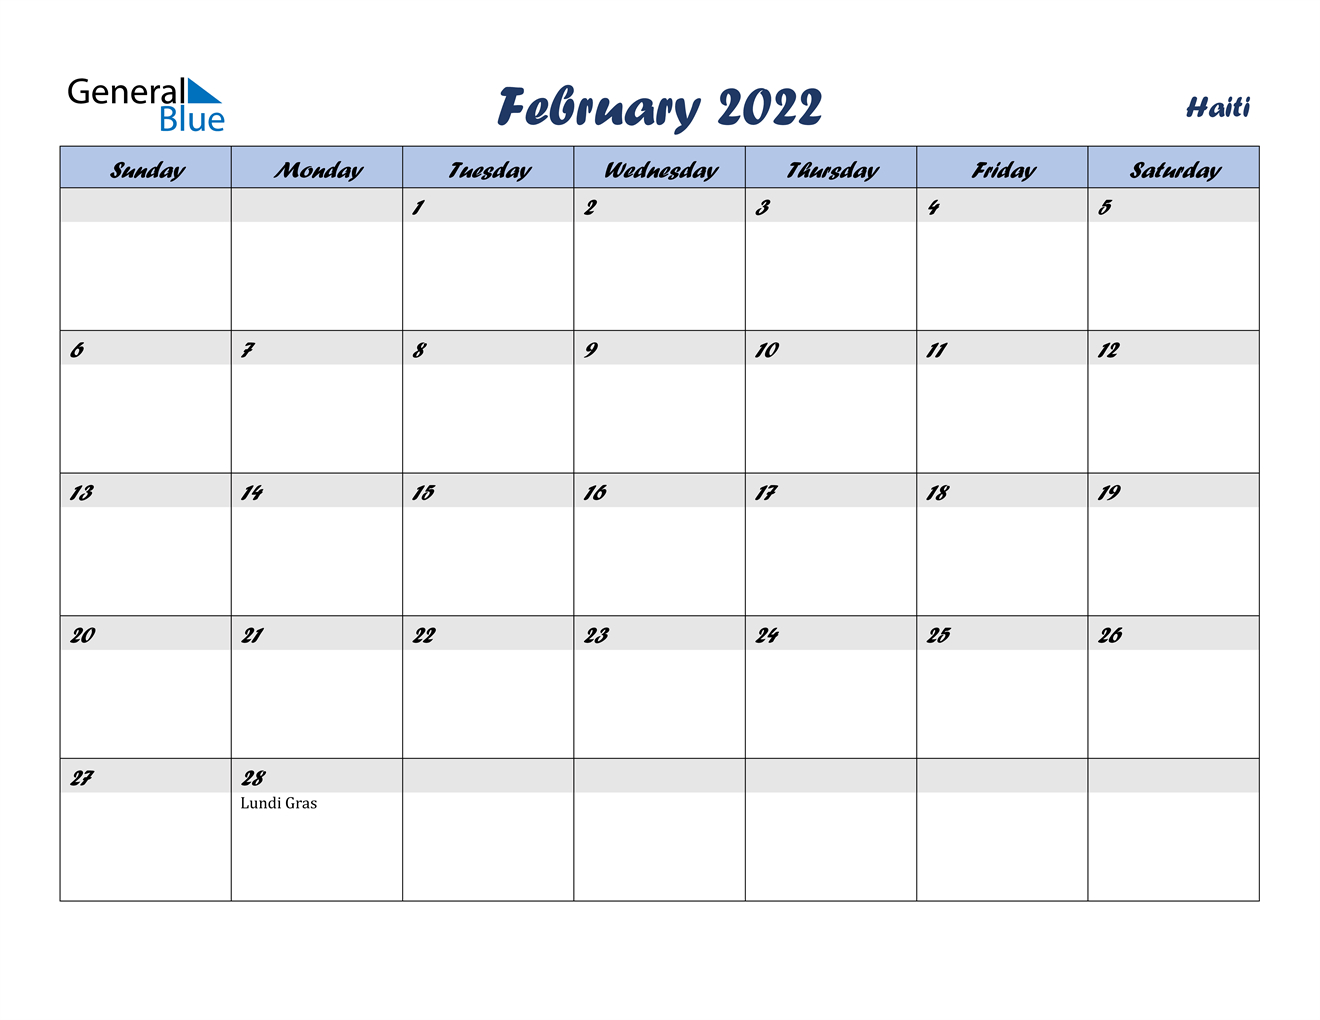 February 2022 Calendar - Haiti